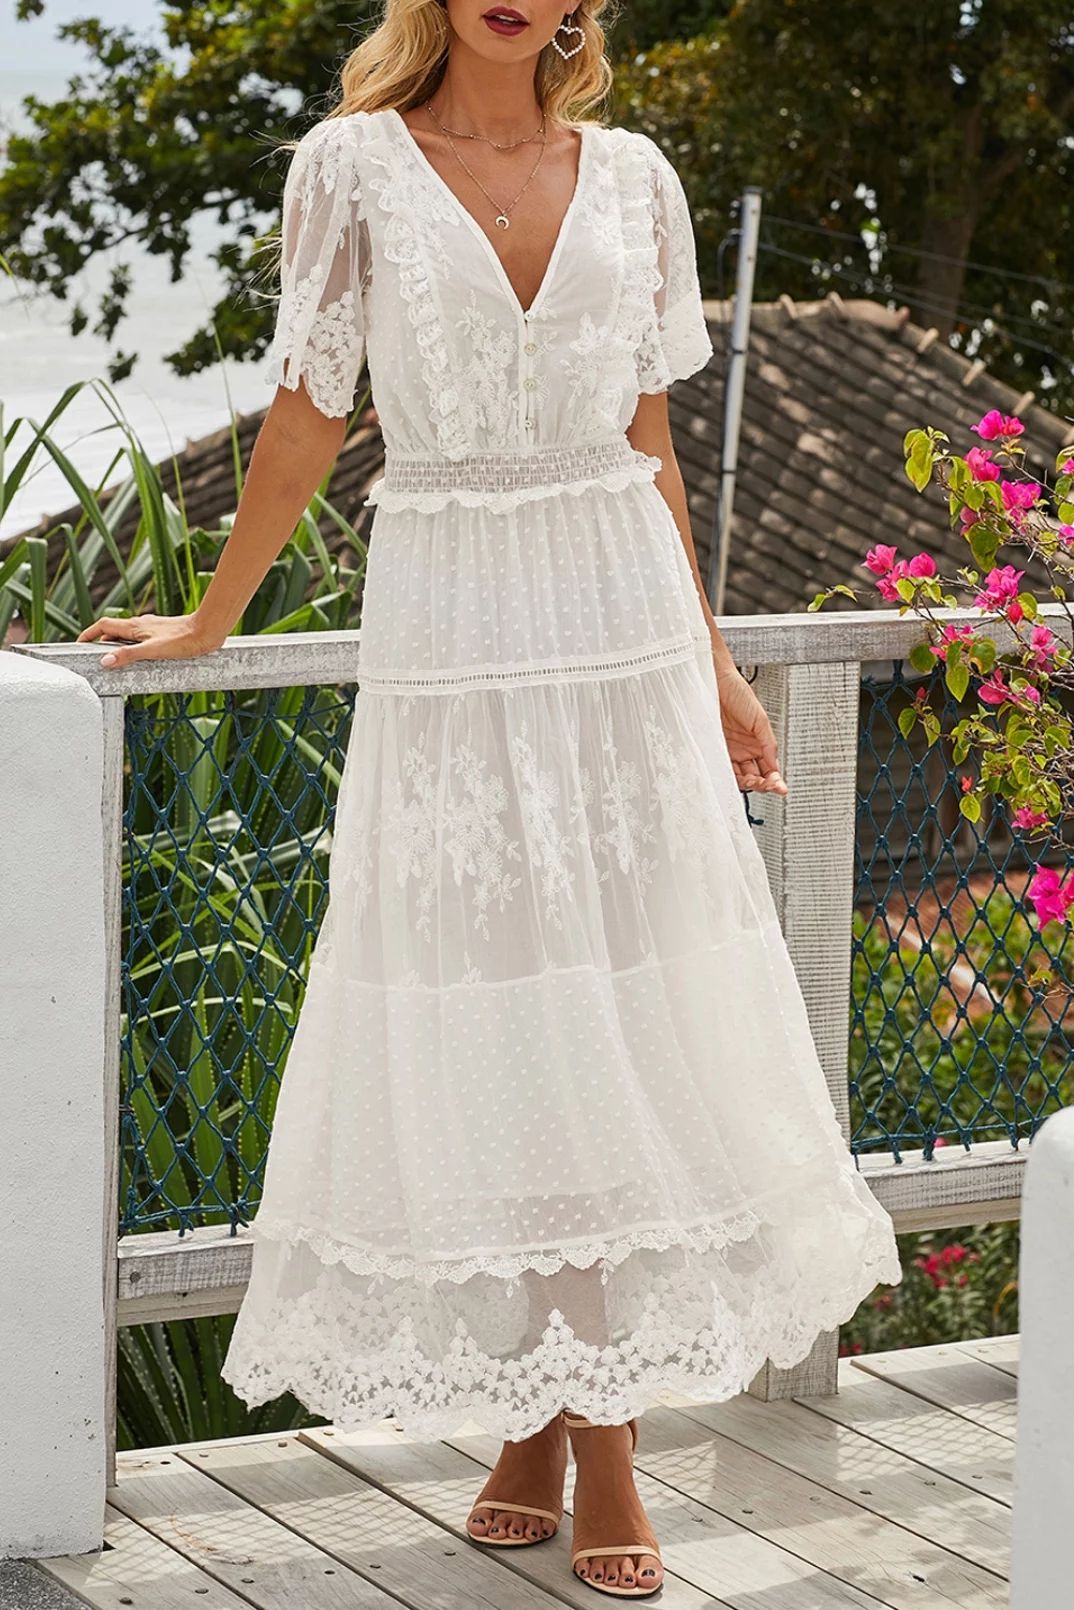 Dokotoo Womens White V Neck Short Sleeve Lace Dress Loose Maxi Evening Party Dresses Size Medium ... | Walmart (US)